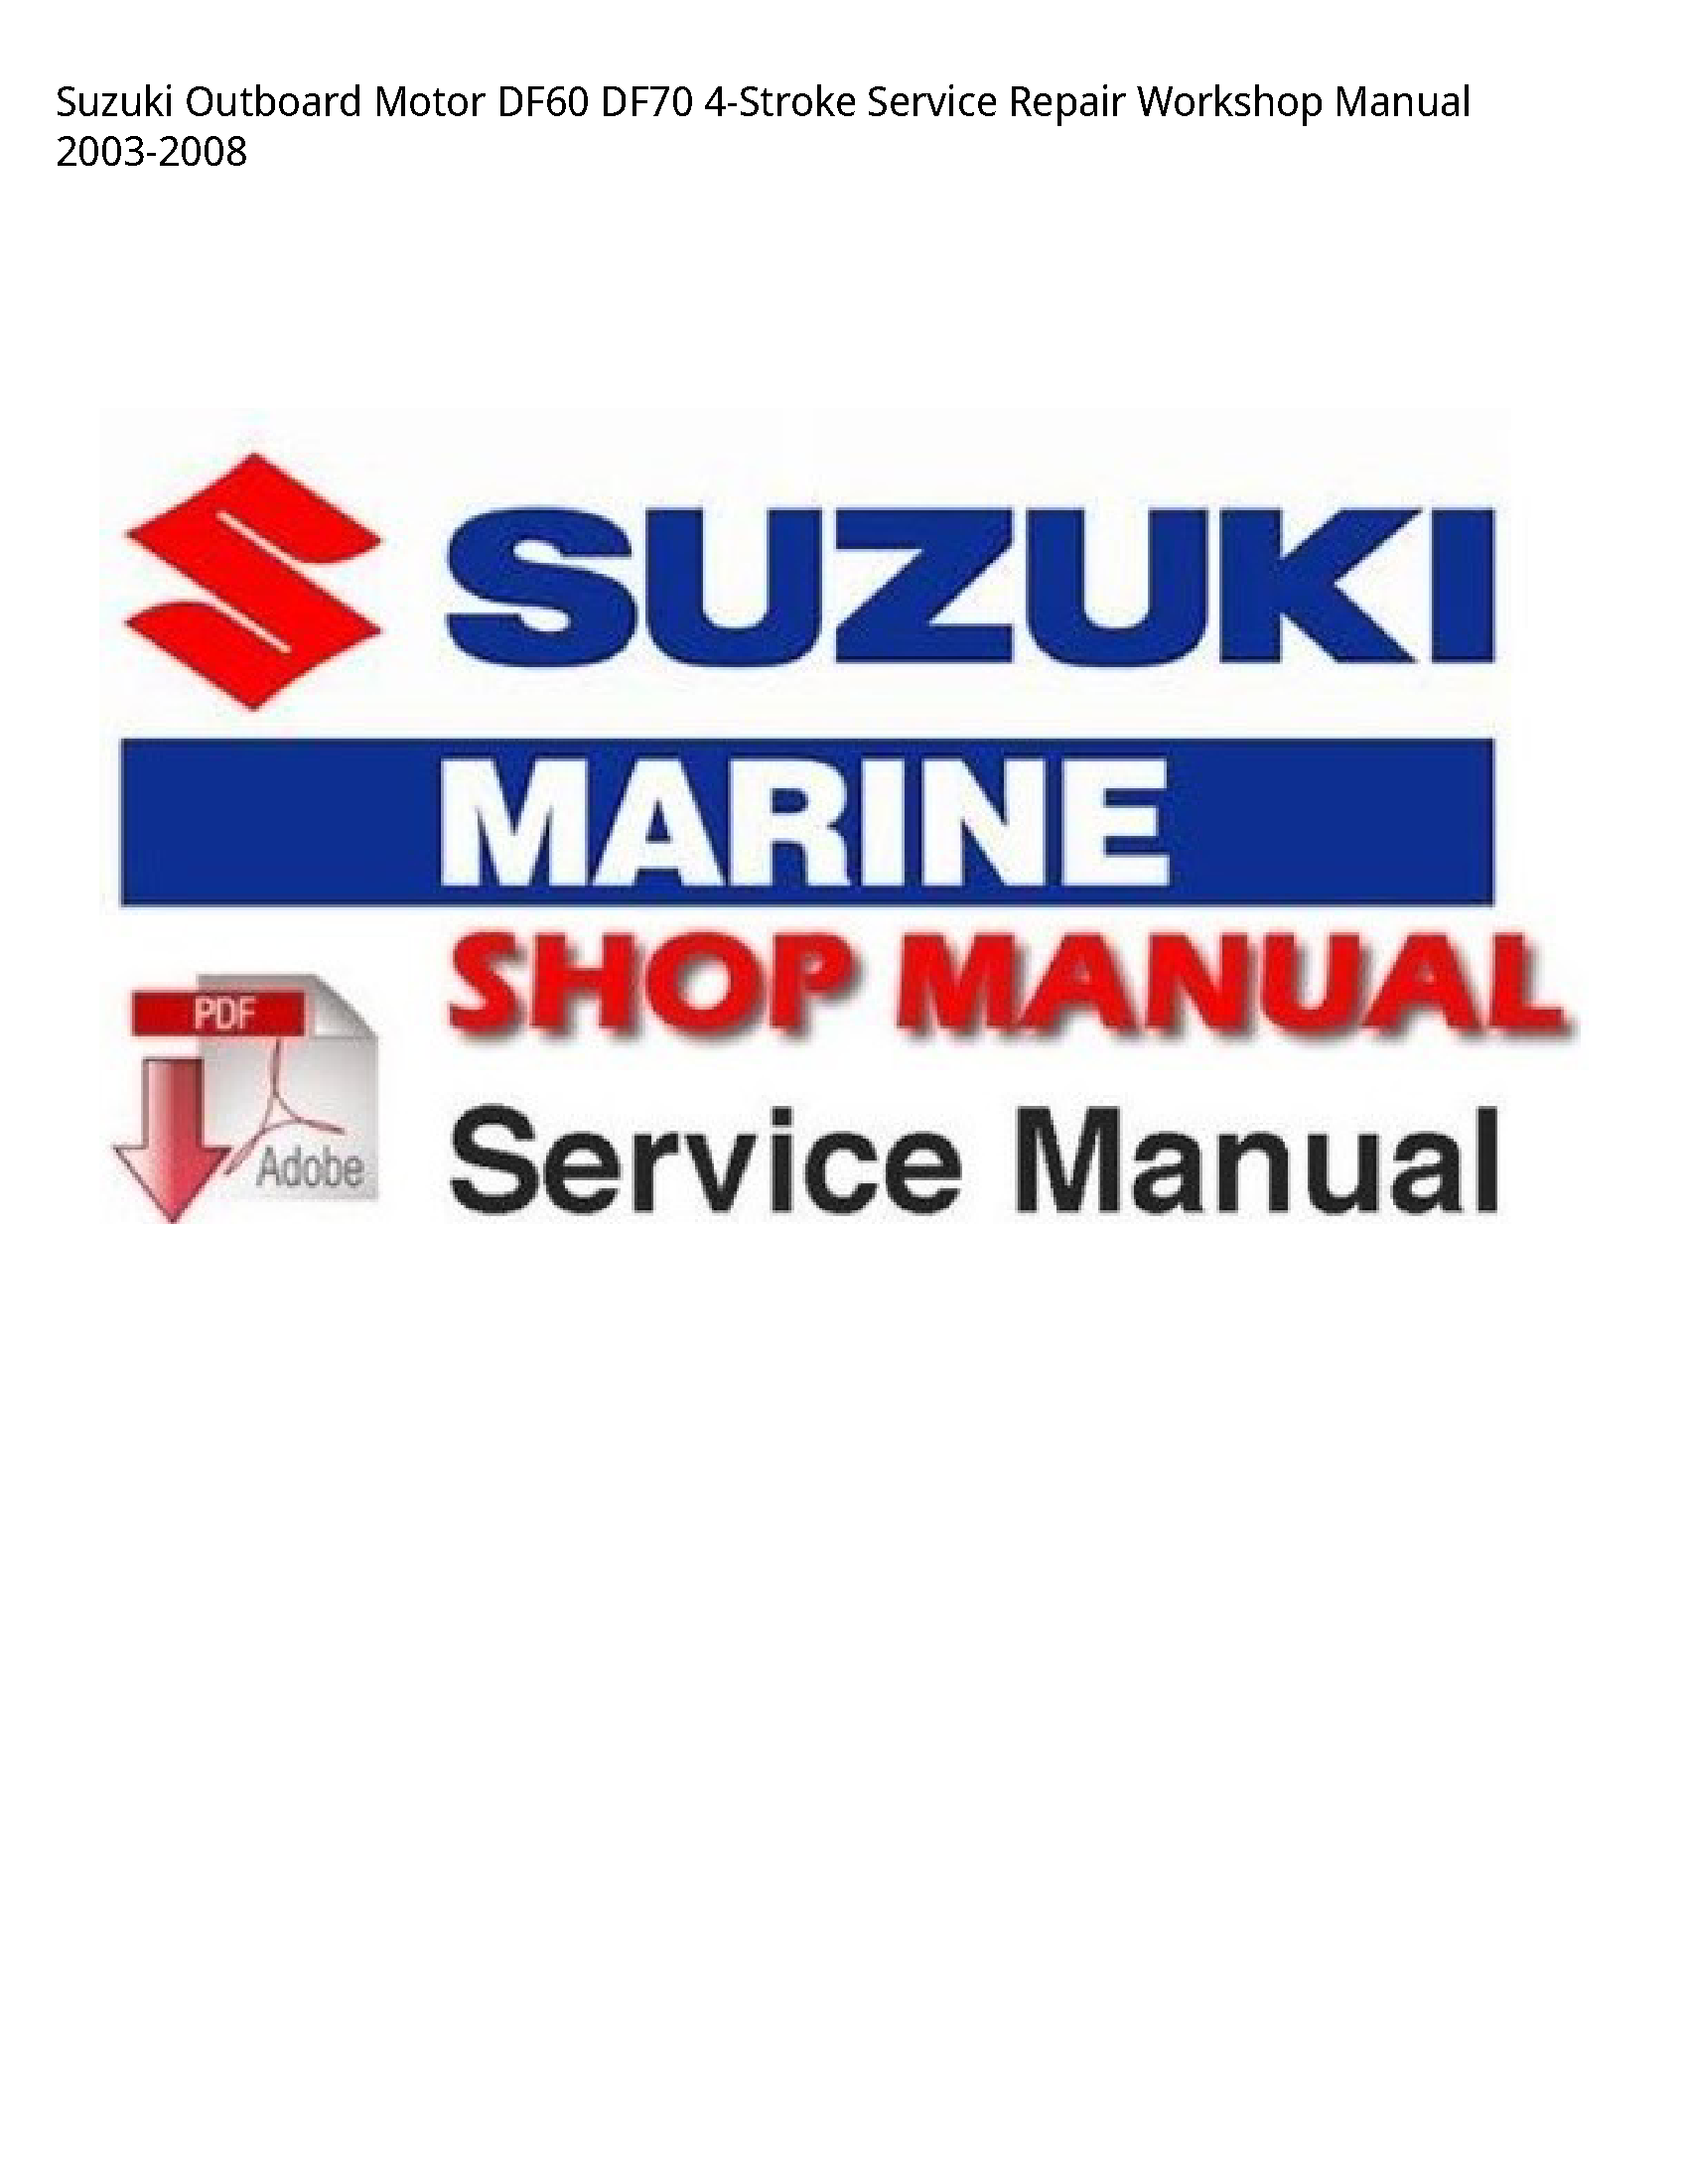 Suzuki DF60 Outboard Motor manual